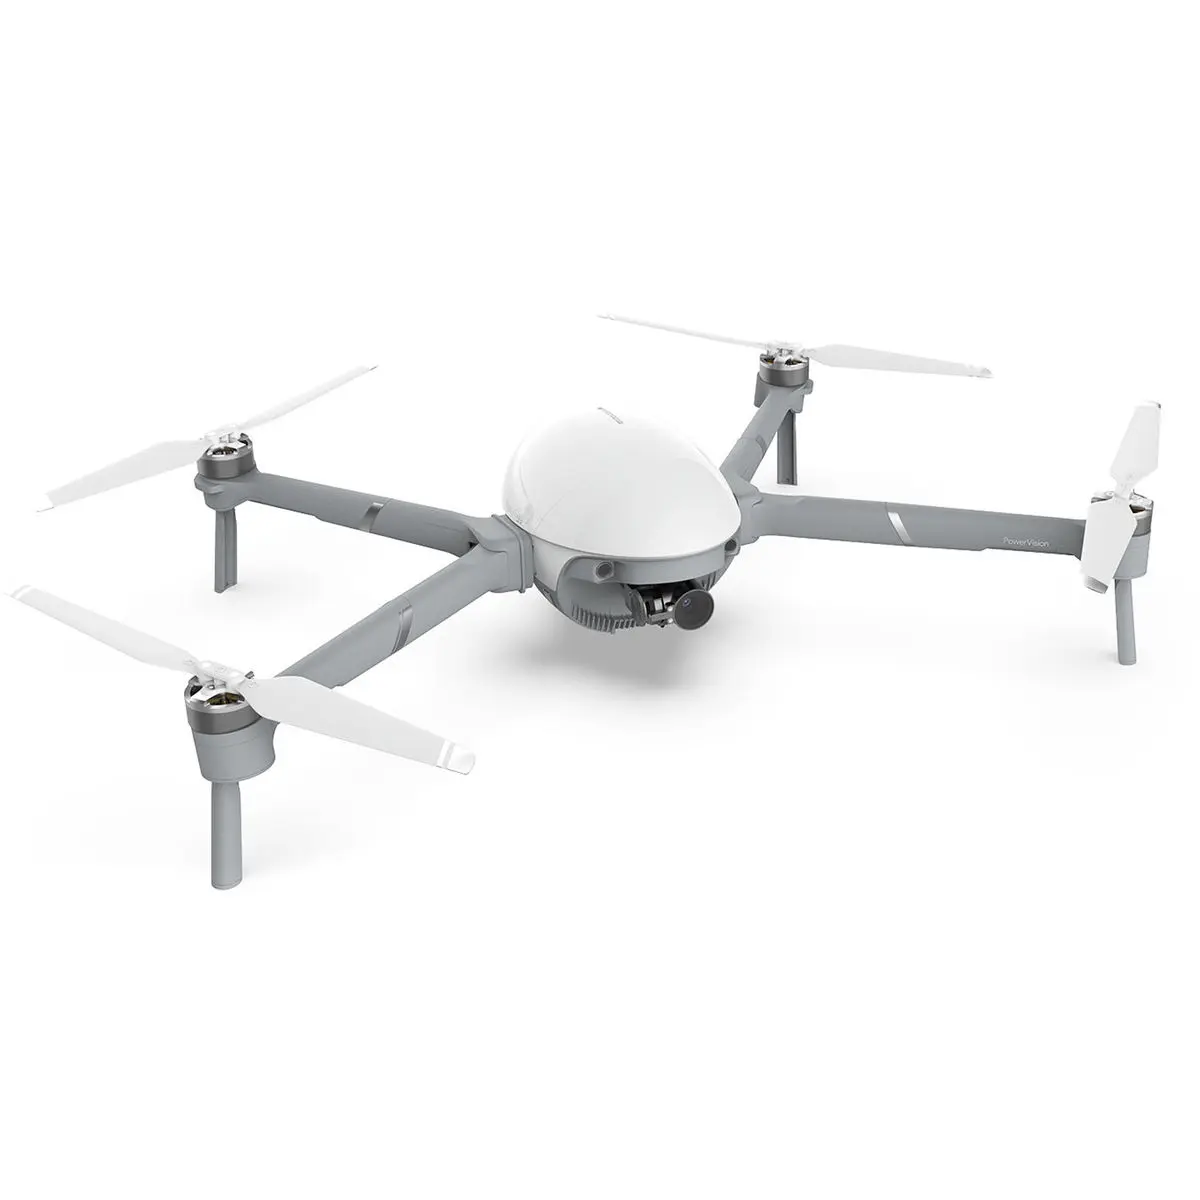 2. Powervision PowerEgg X Drone